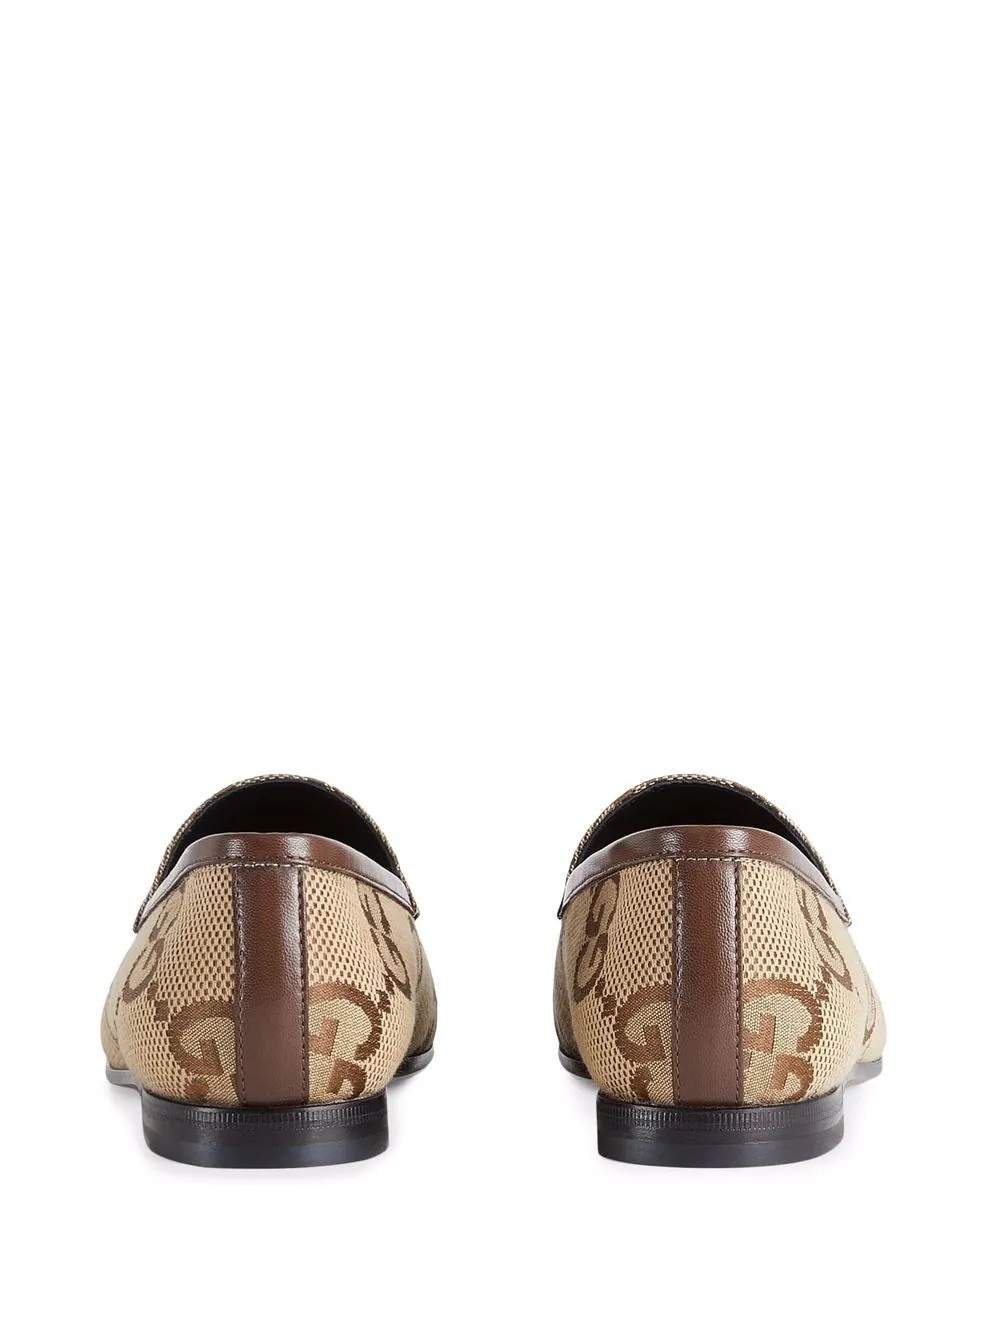 GG Gucci Jordaan loafers - 3